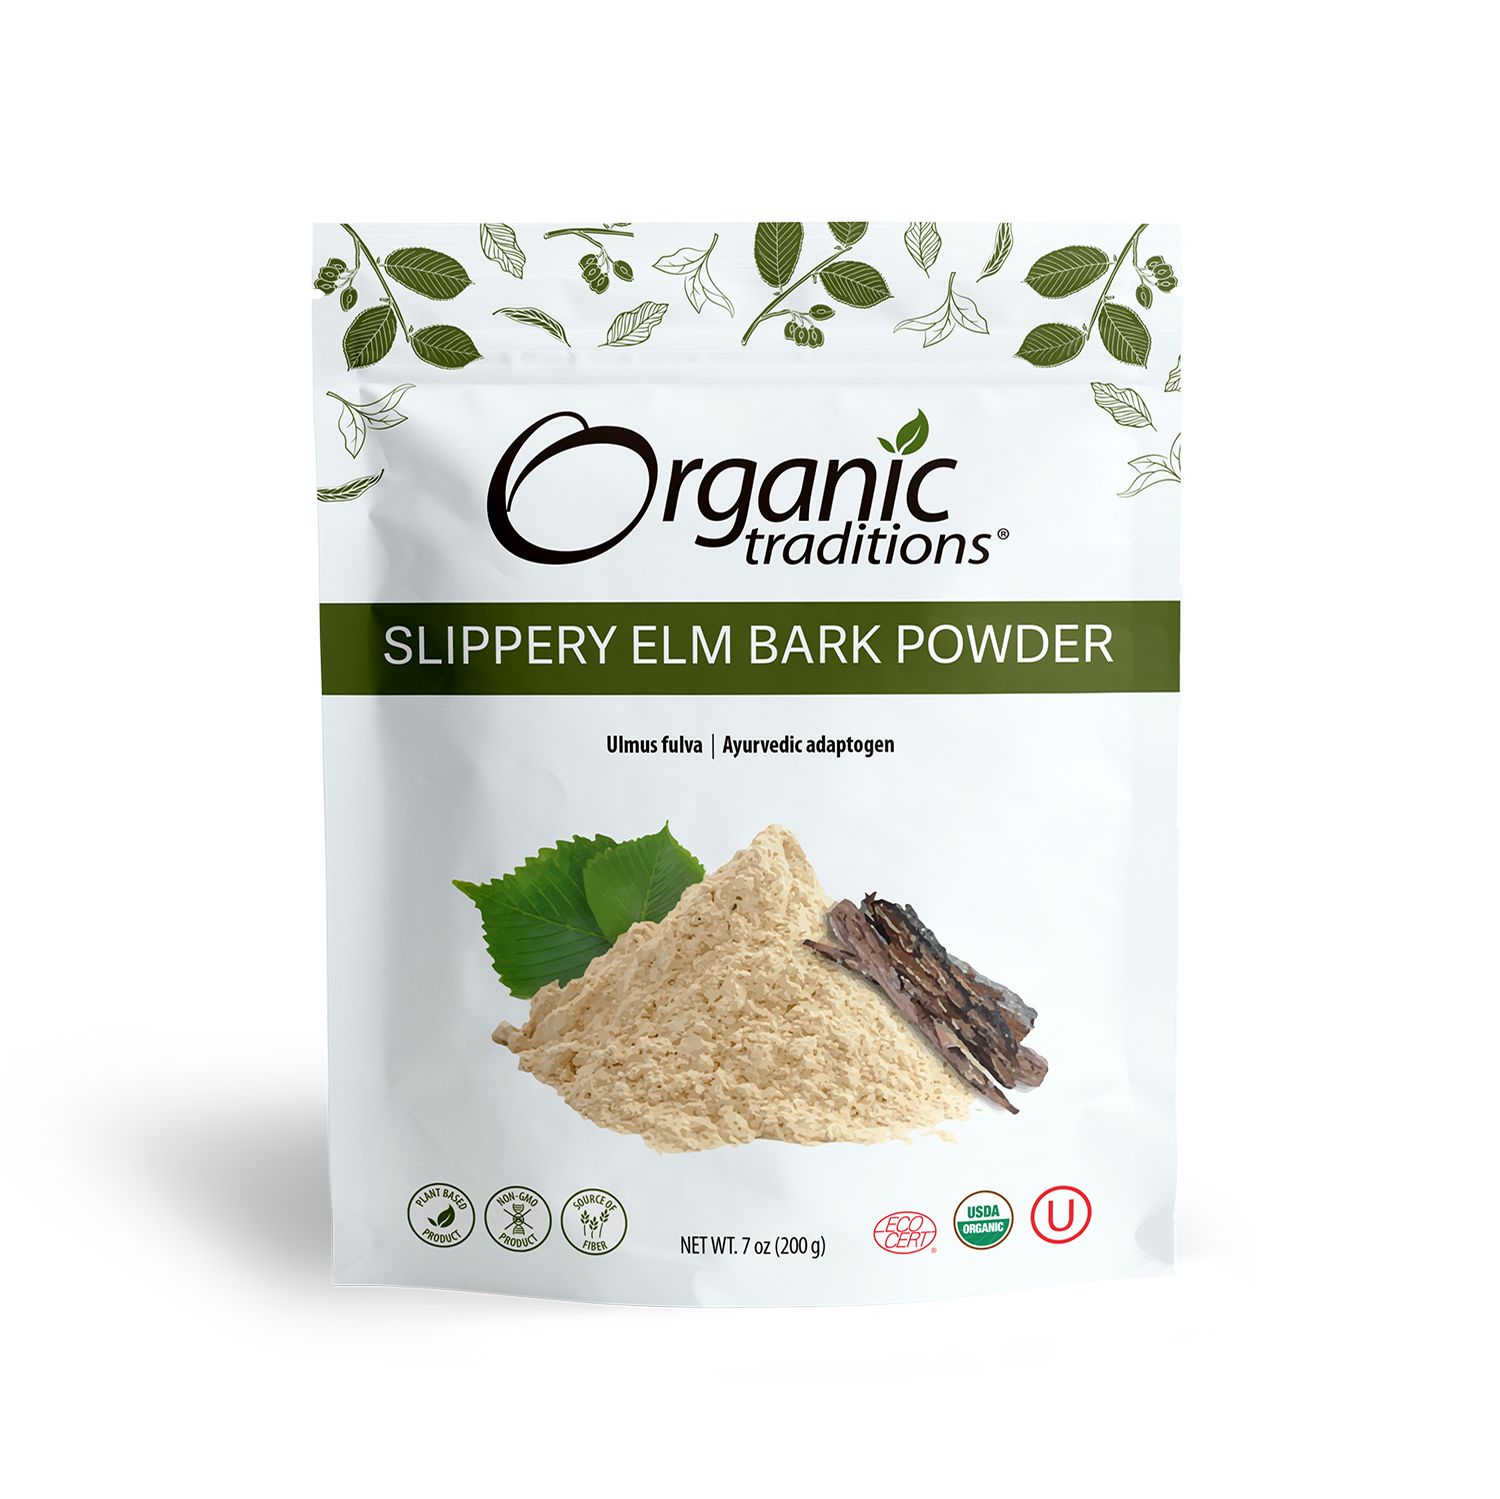 organic traditions slippery elm bark powder front of bag image